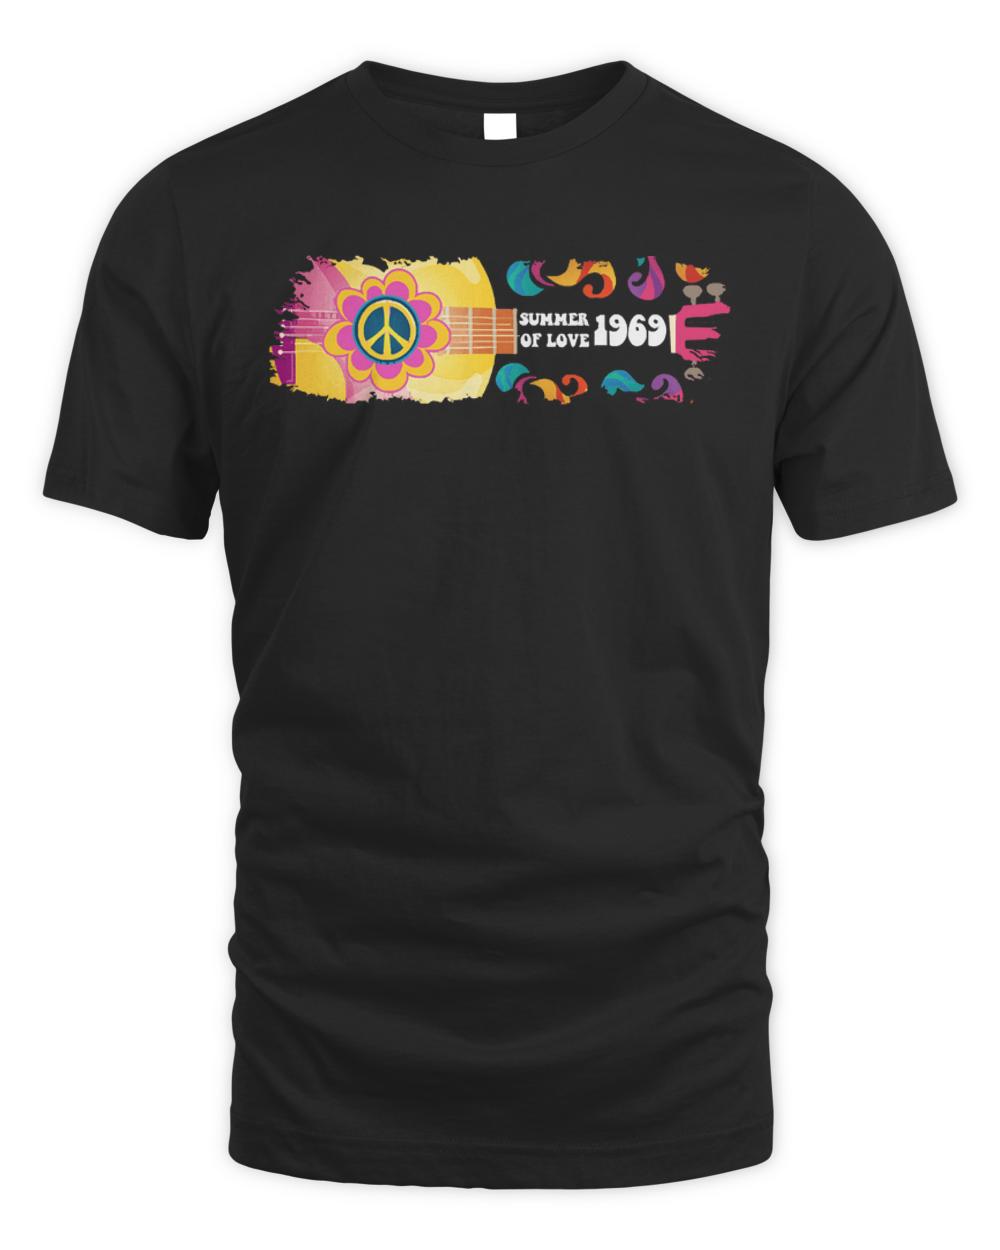 Woodstock T- Shirt Summer of Love 1969 - Woodstock T- Shirt